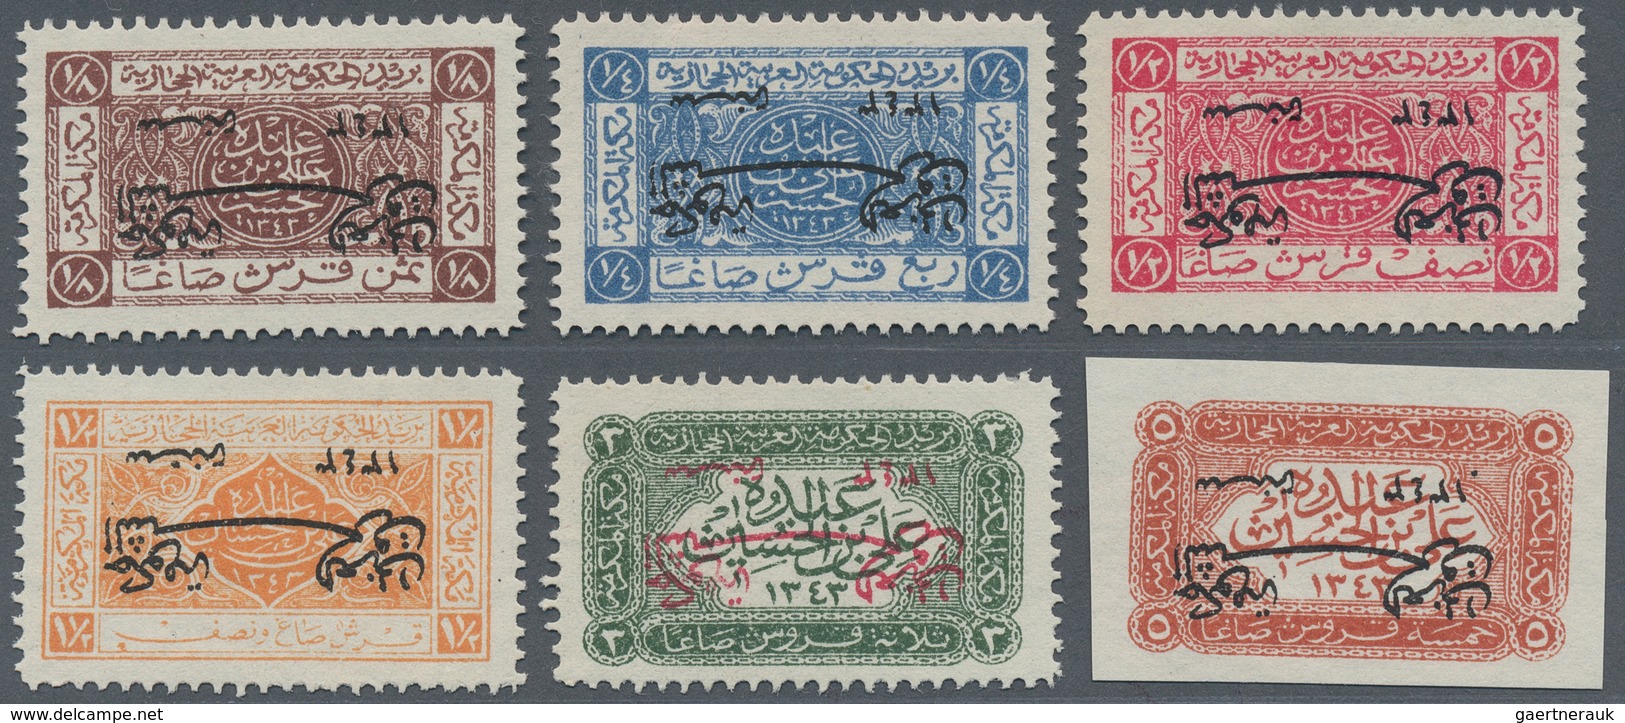 09171 Jordanien: 1924, Saudi Arabia King Ali Issue Six Values All Showing Inverted Overprint, No Gum. As L - Jordanien